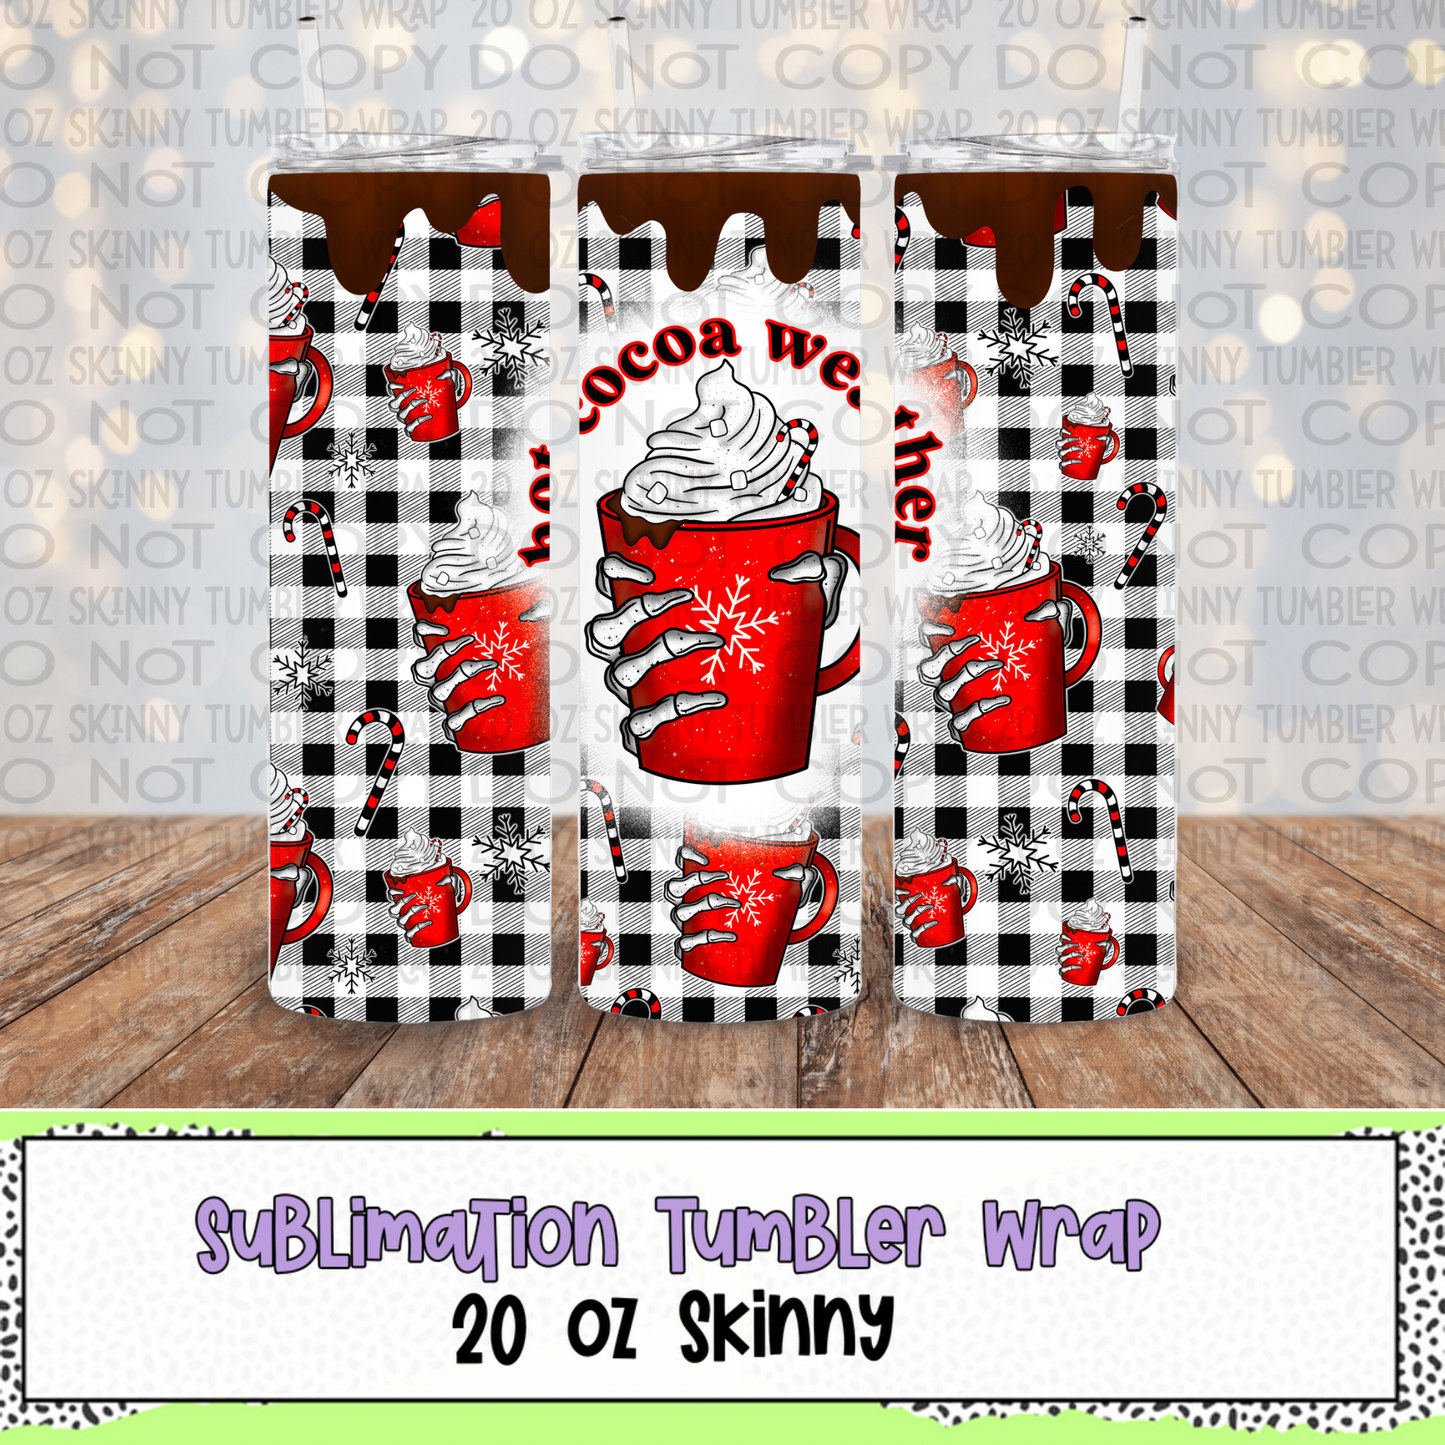 Hot Cocoa Weather 20 Oz Skinny Tumbler Wrap - Sublimation Transfer - RTS